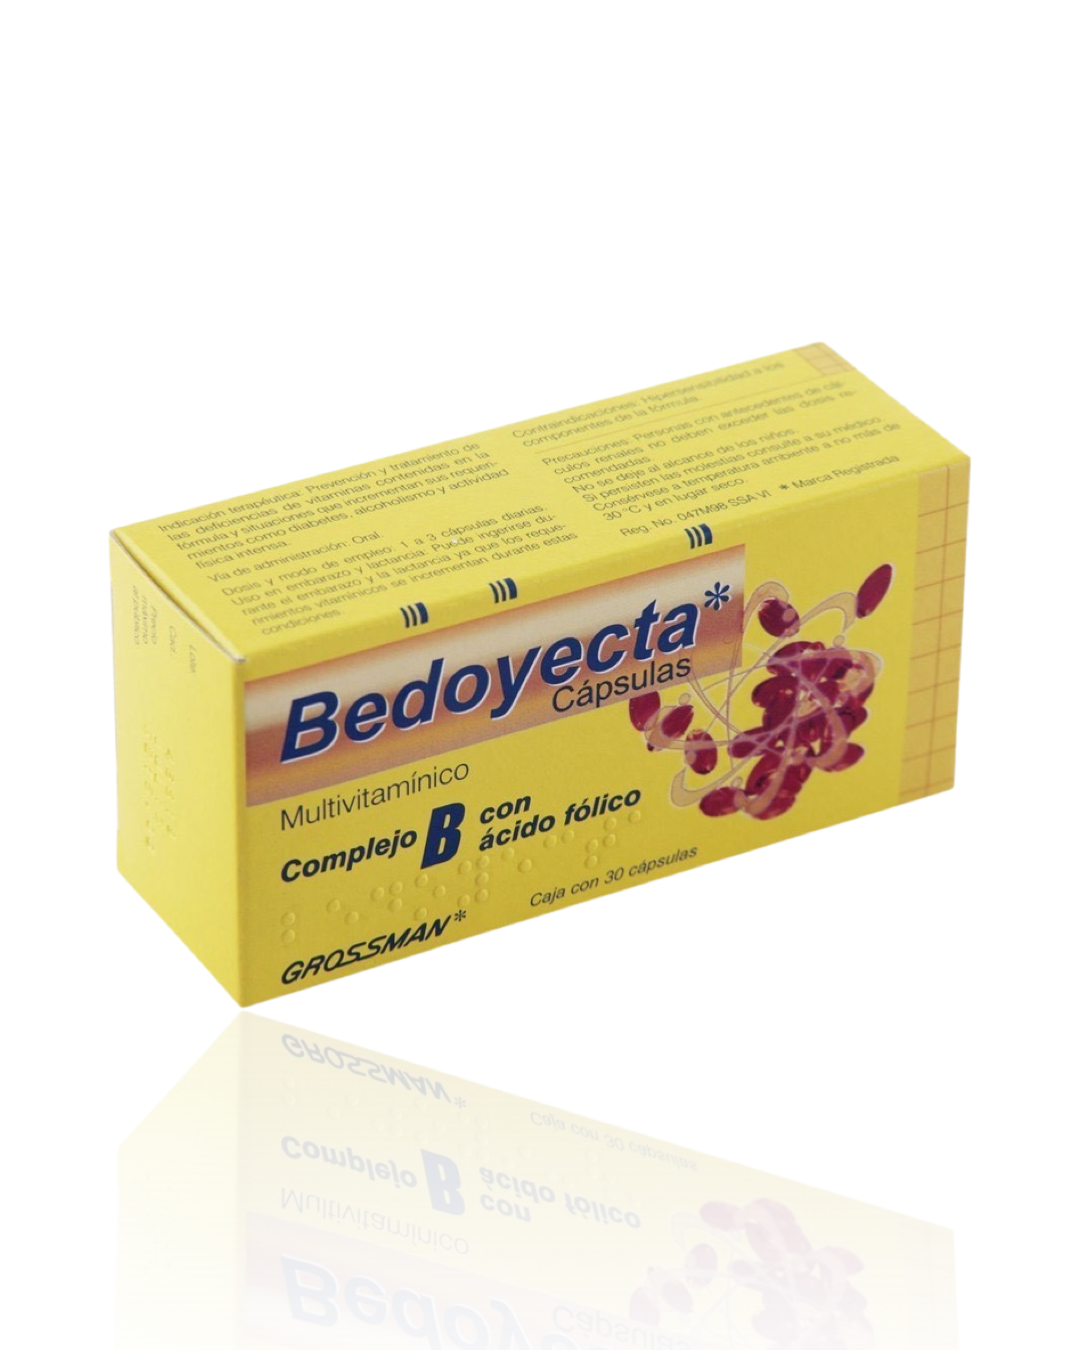 Bedoyecta Complejo B, Ácido Fólico